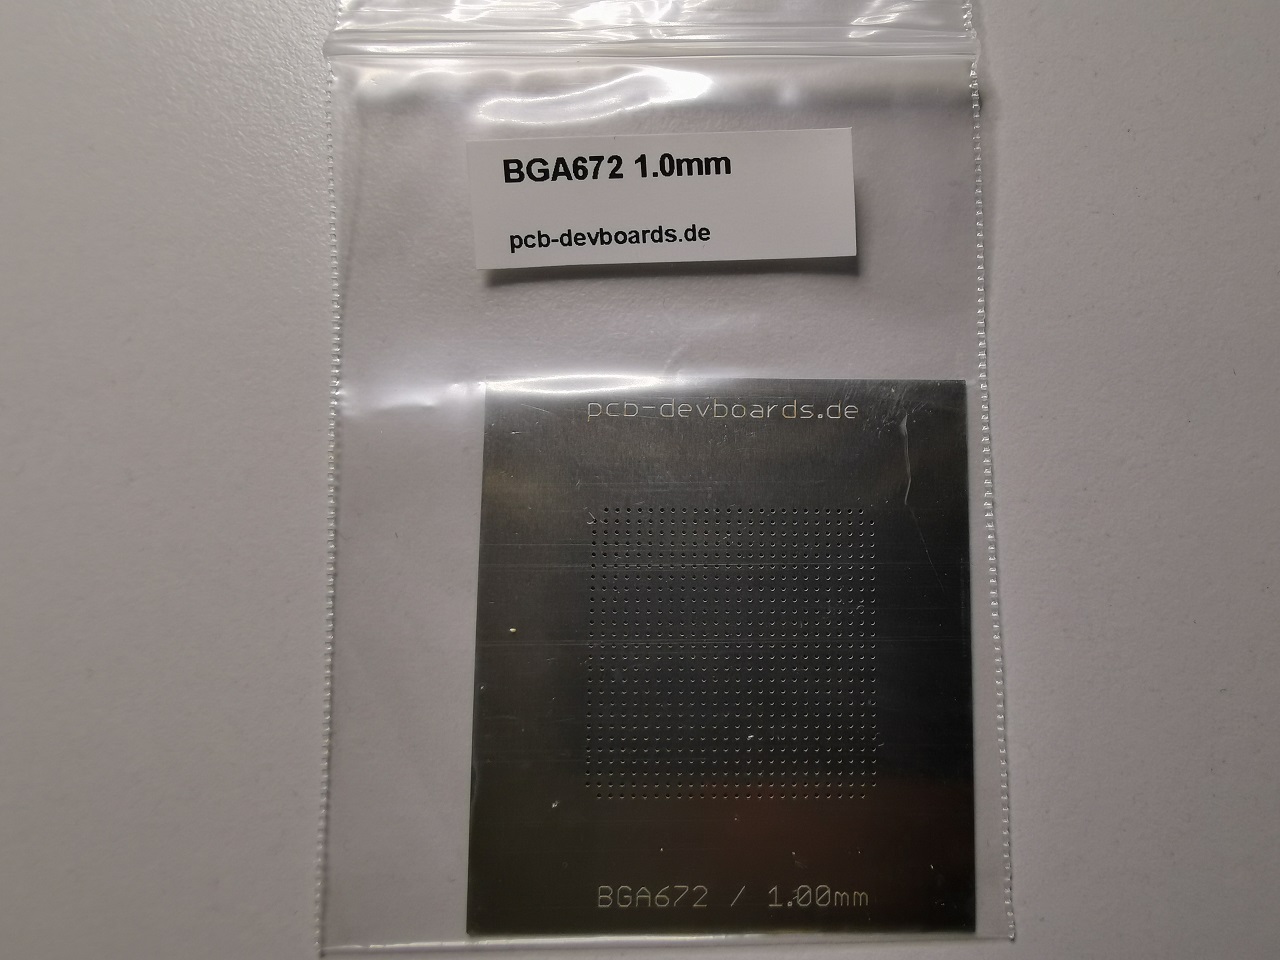 FBGA-672 1.0mm, SMD stencil